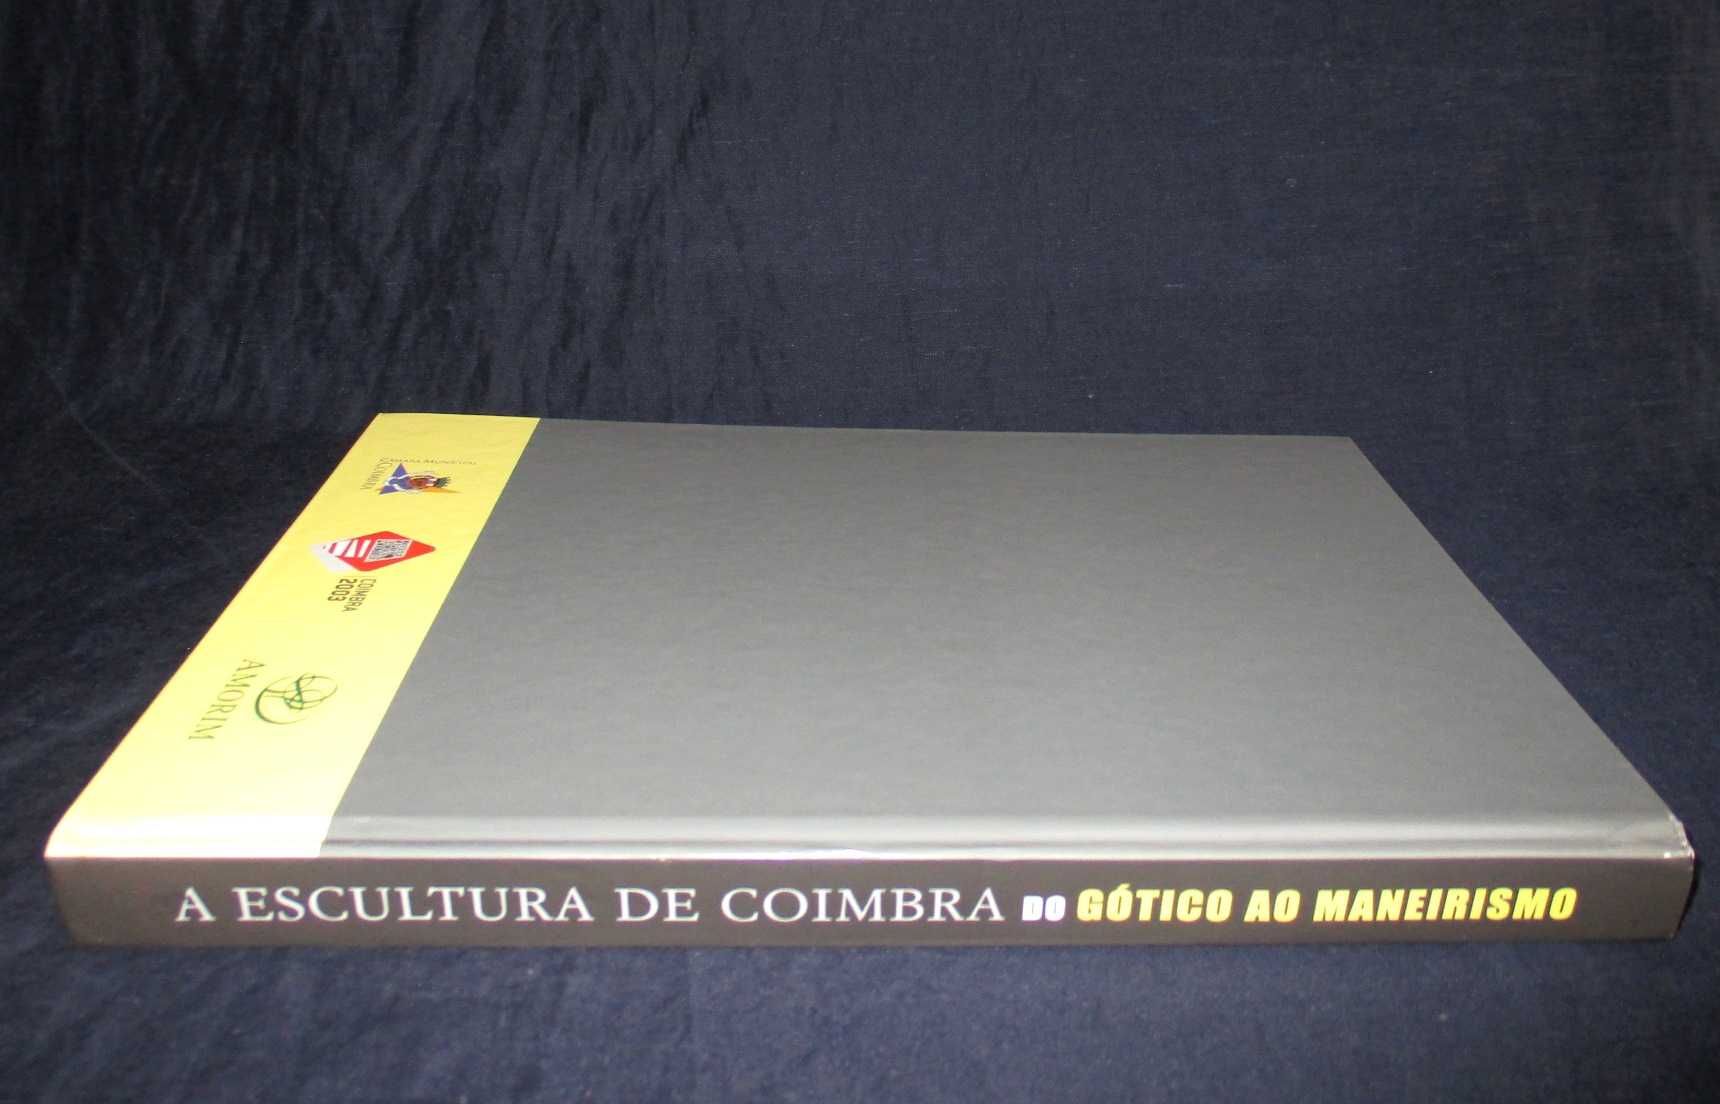 Livro A Escultura de Coimbra do Gótico ao Maneirismo